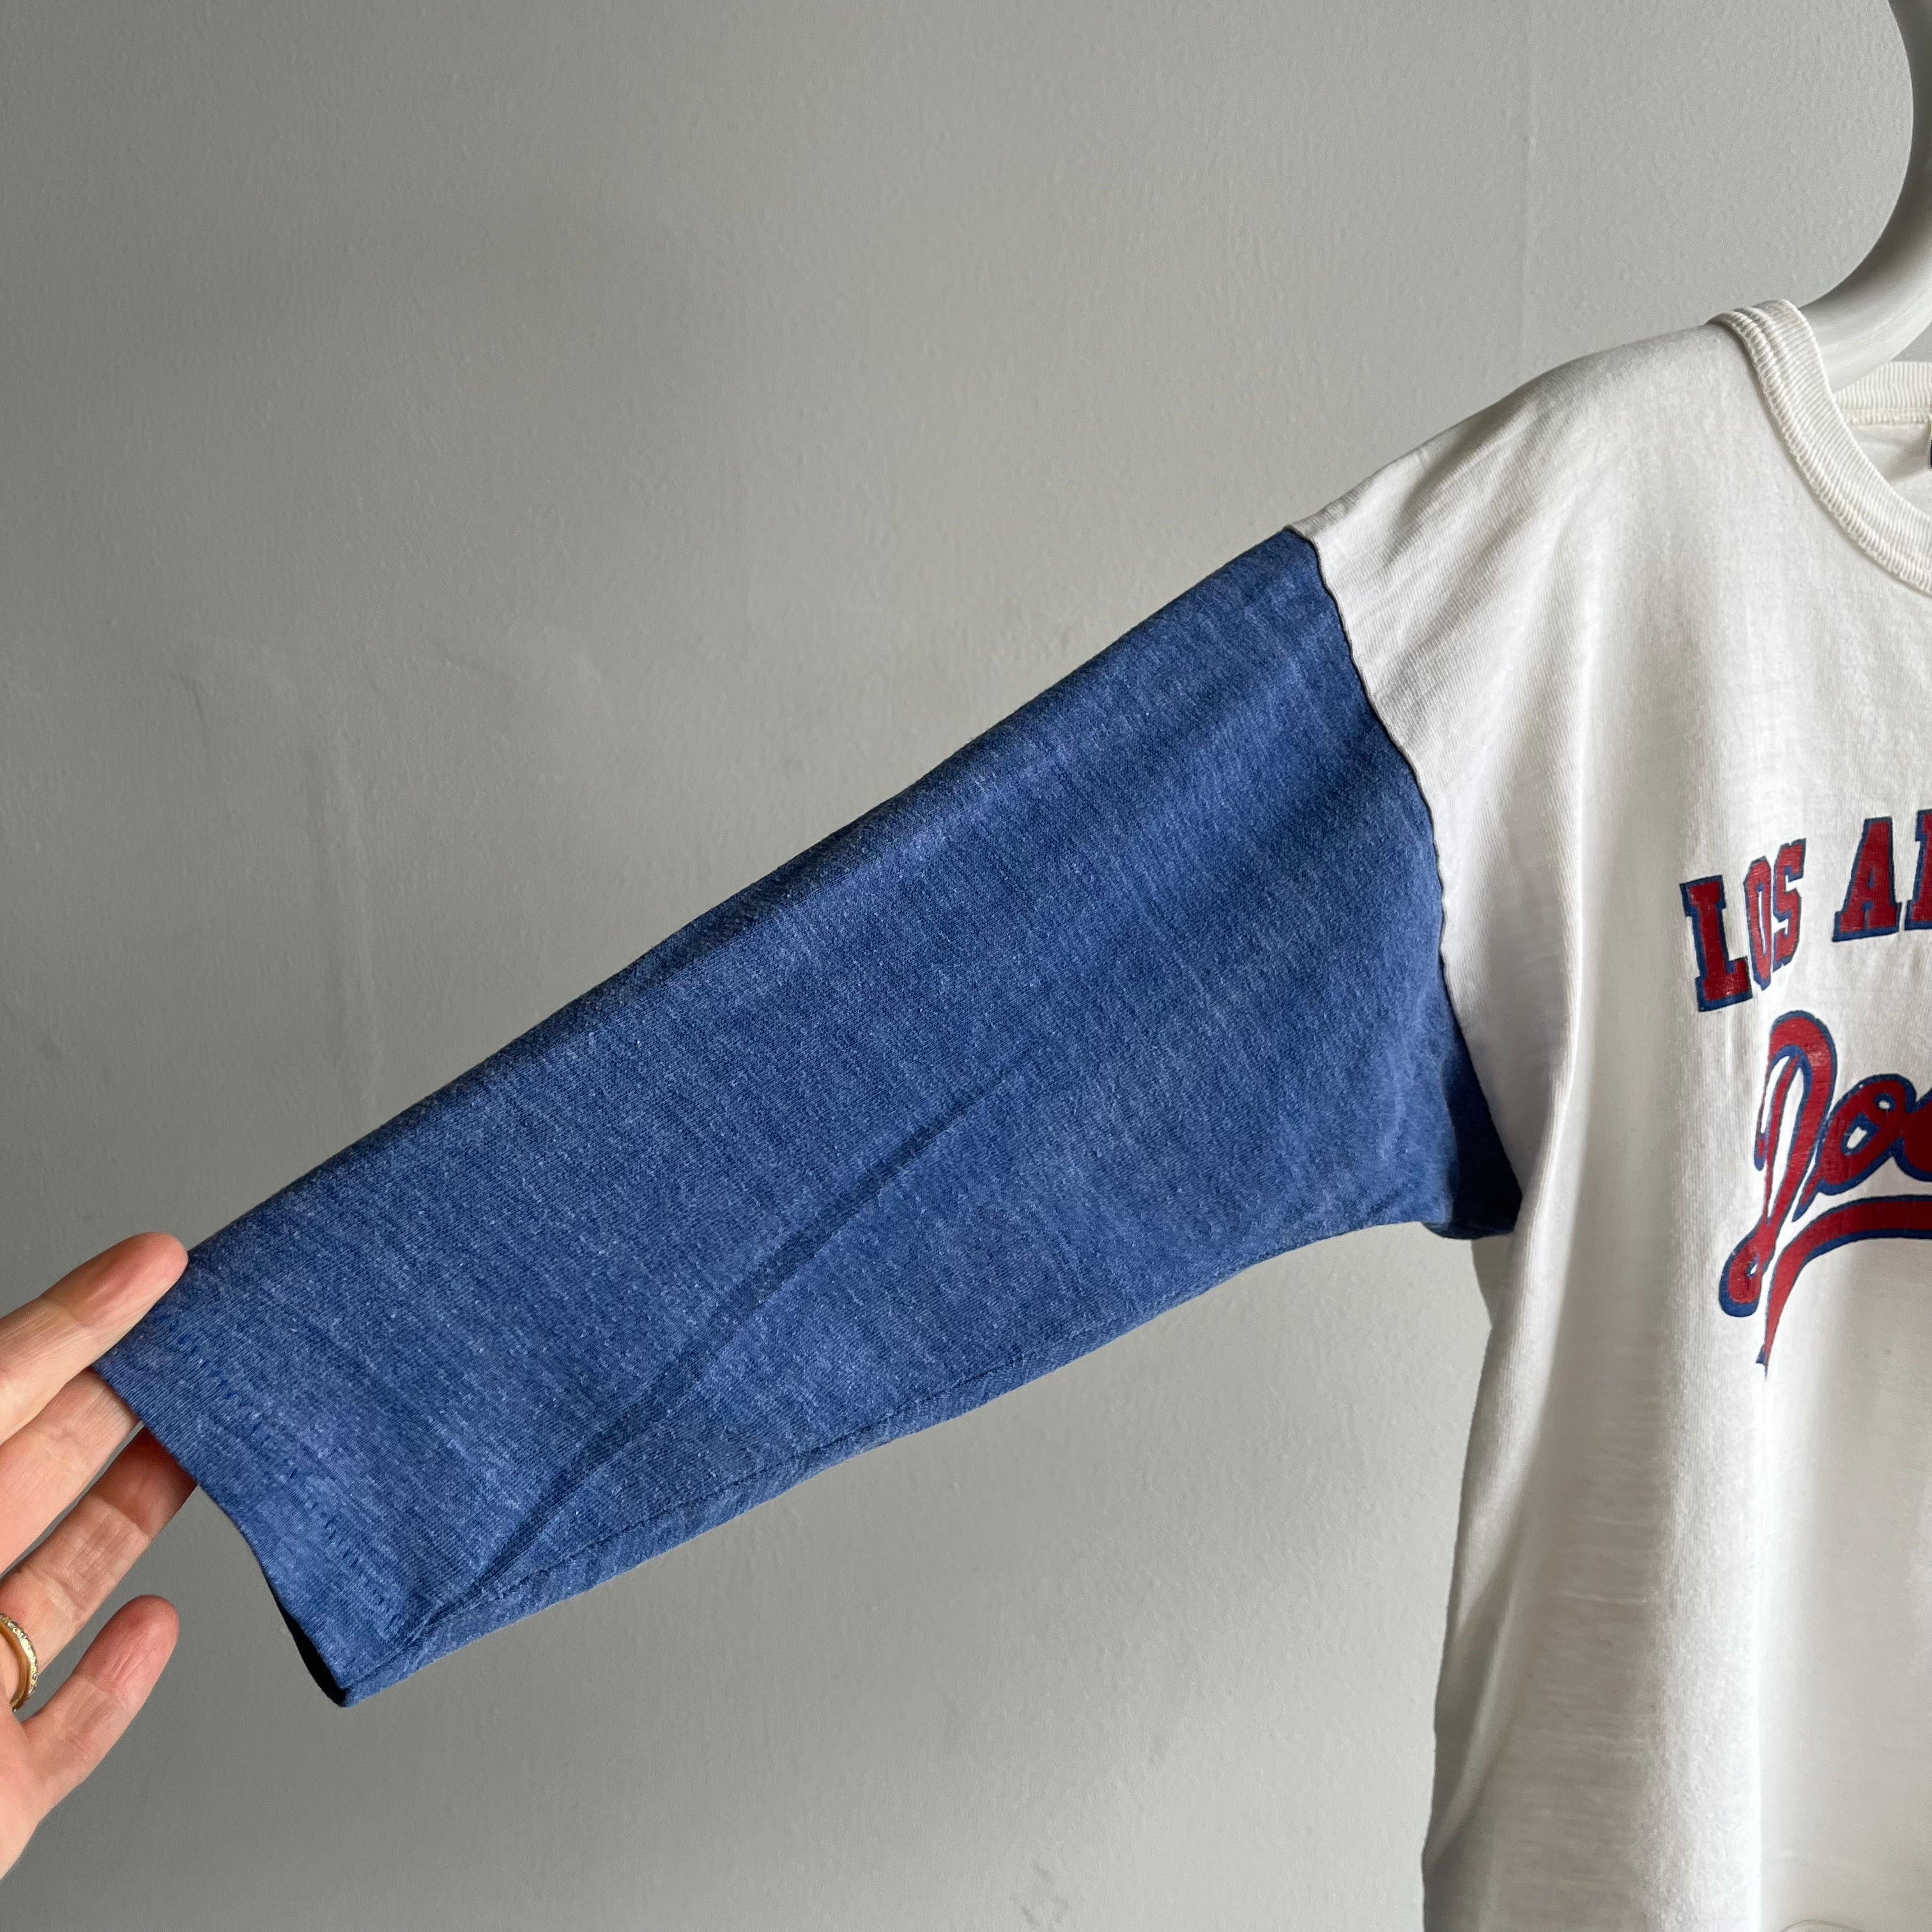 Los Angeles Dodgers Vintage Shirt